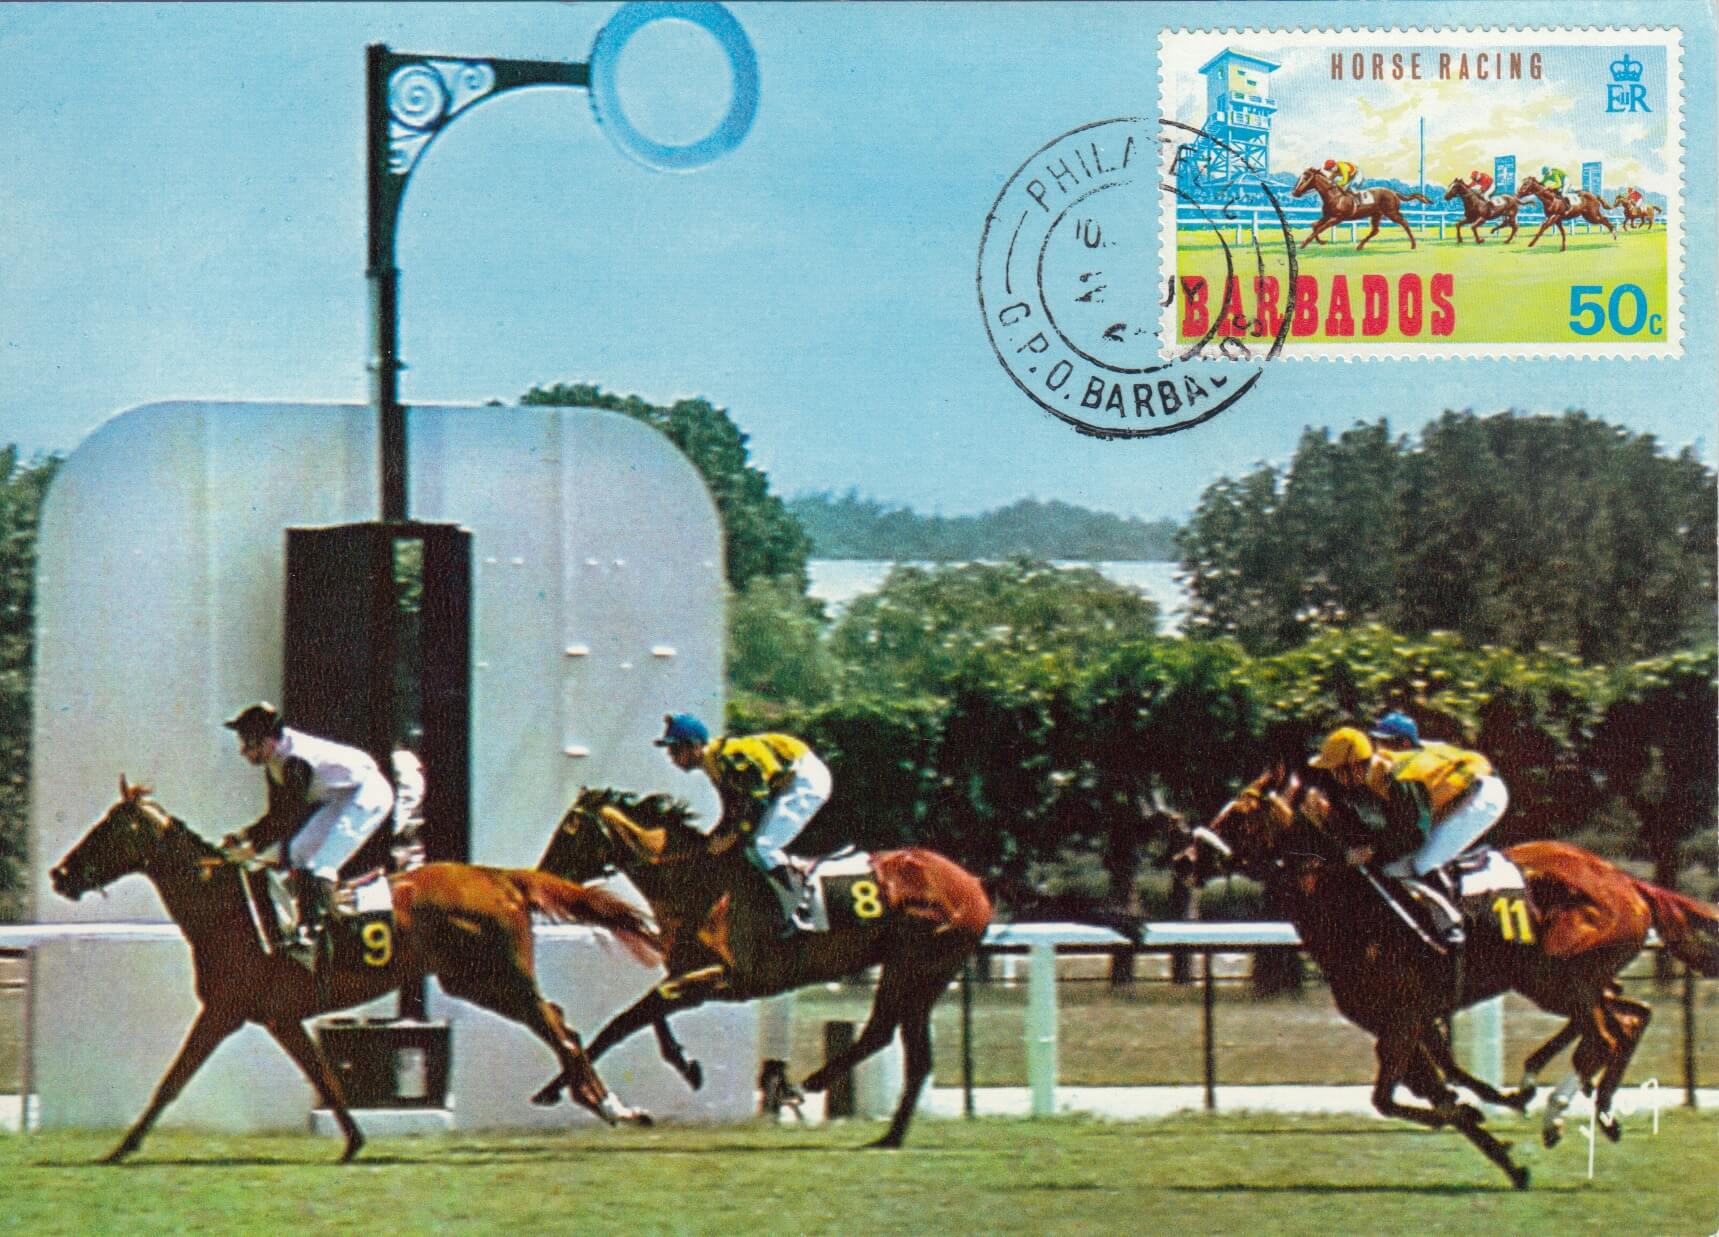 Barbados Horse Racing Commemorative or Souvenir Postcard 1